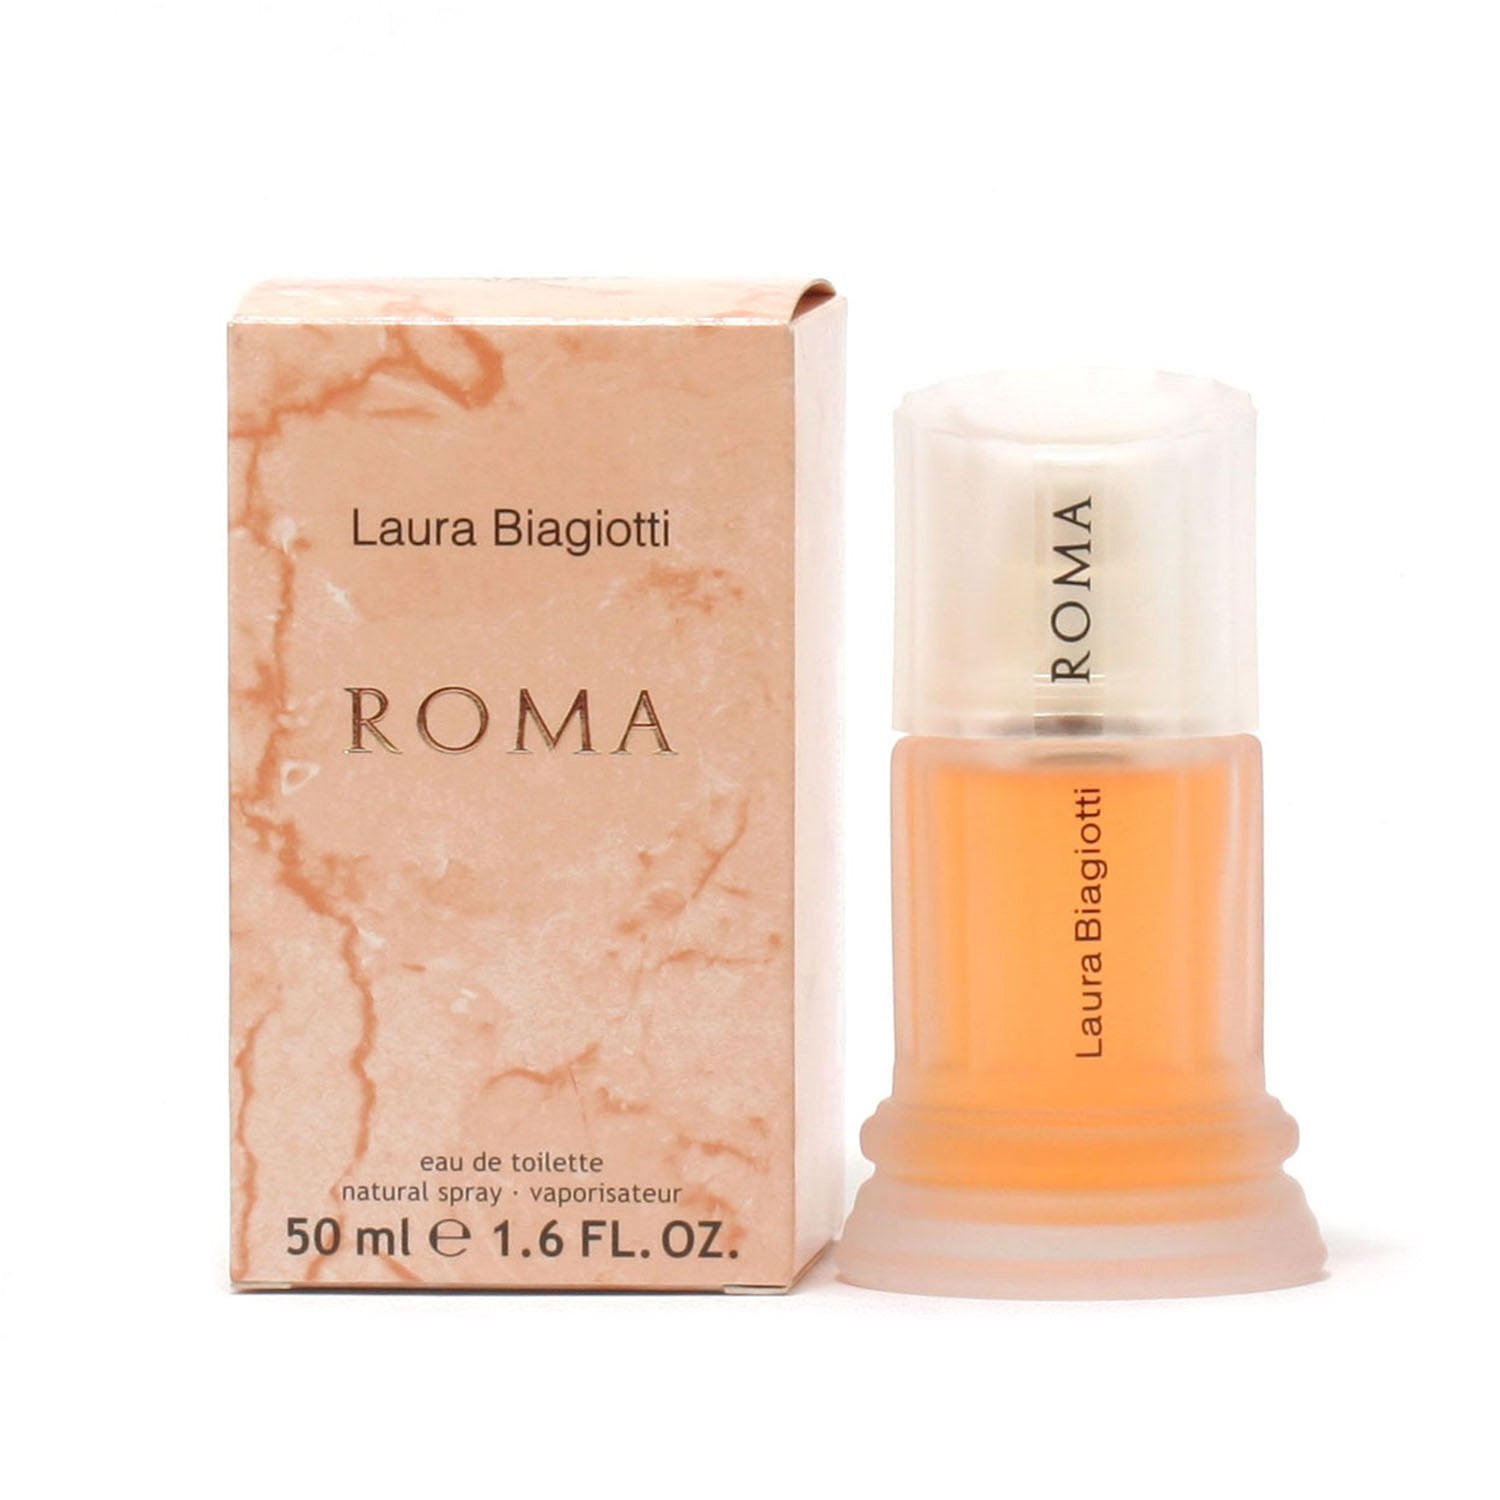 BY DE TOILETTE – Room LAURA FOR - Fragrance SPRAY ROMA WOMEN BIAGOTTI EAU